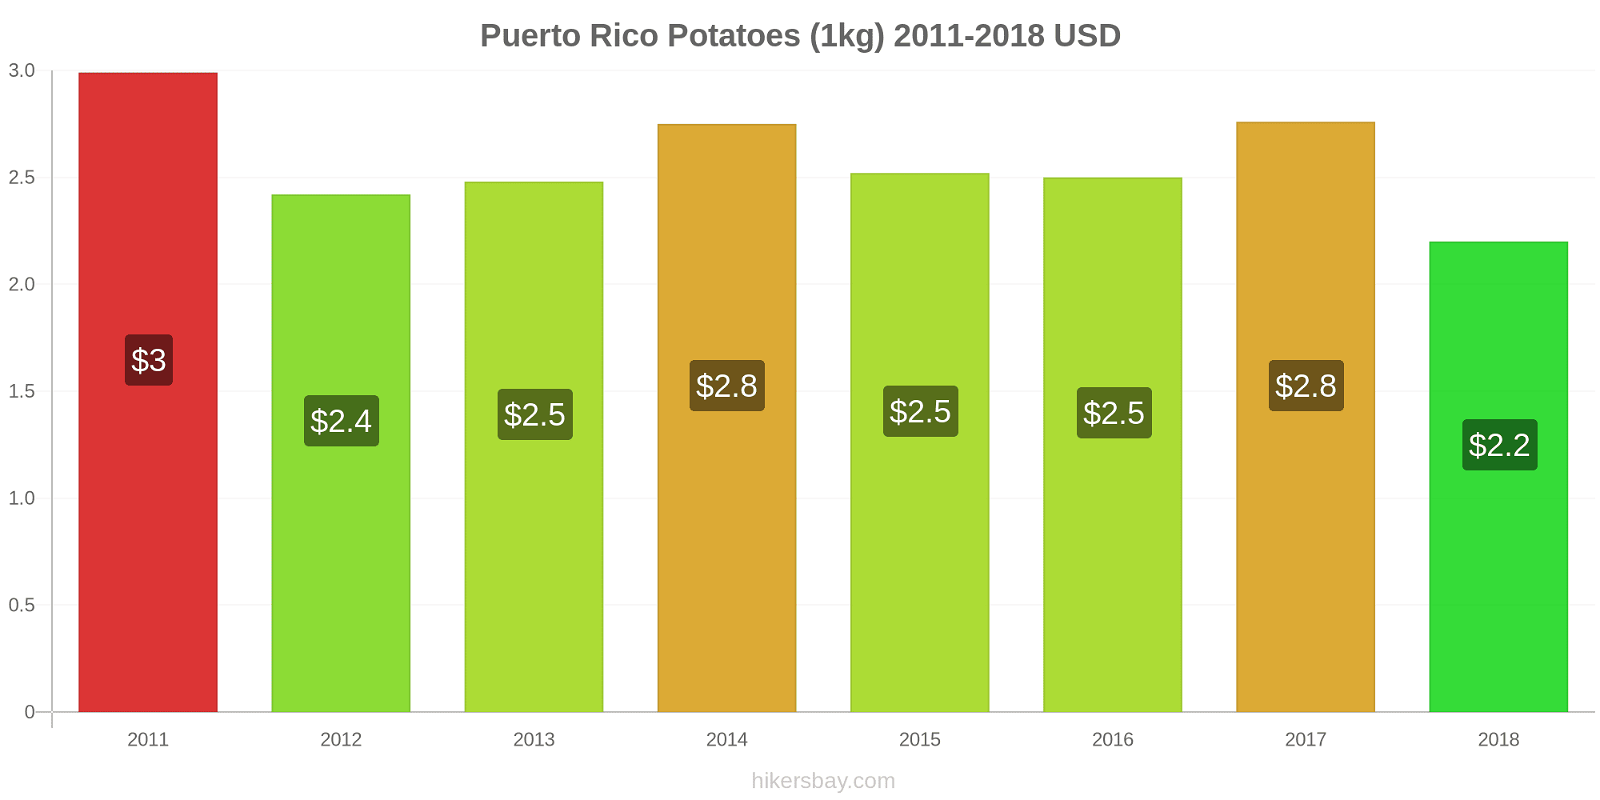 Puerto Rico price changes Potatoes (1kg) hikersbay.com